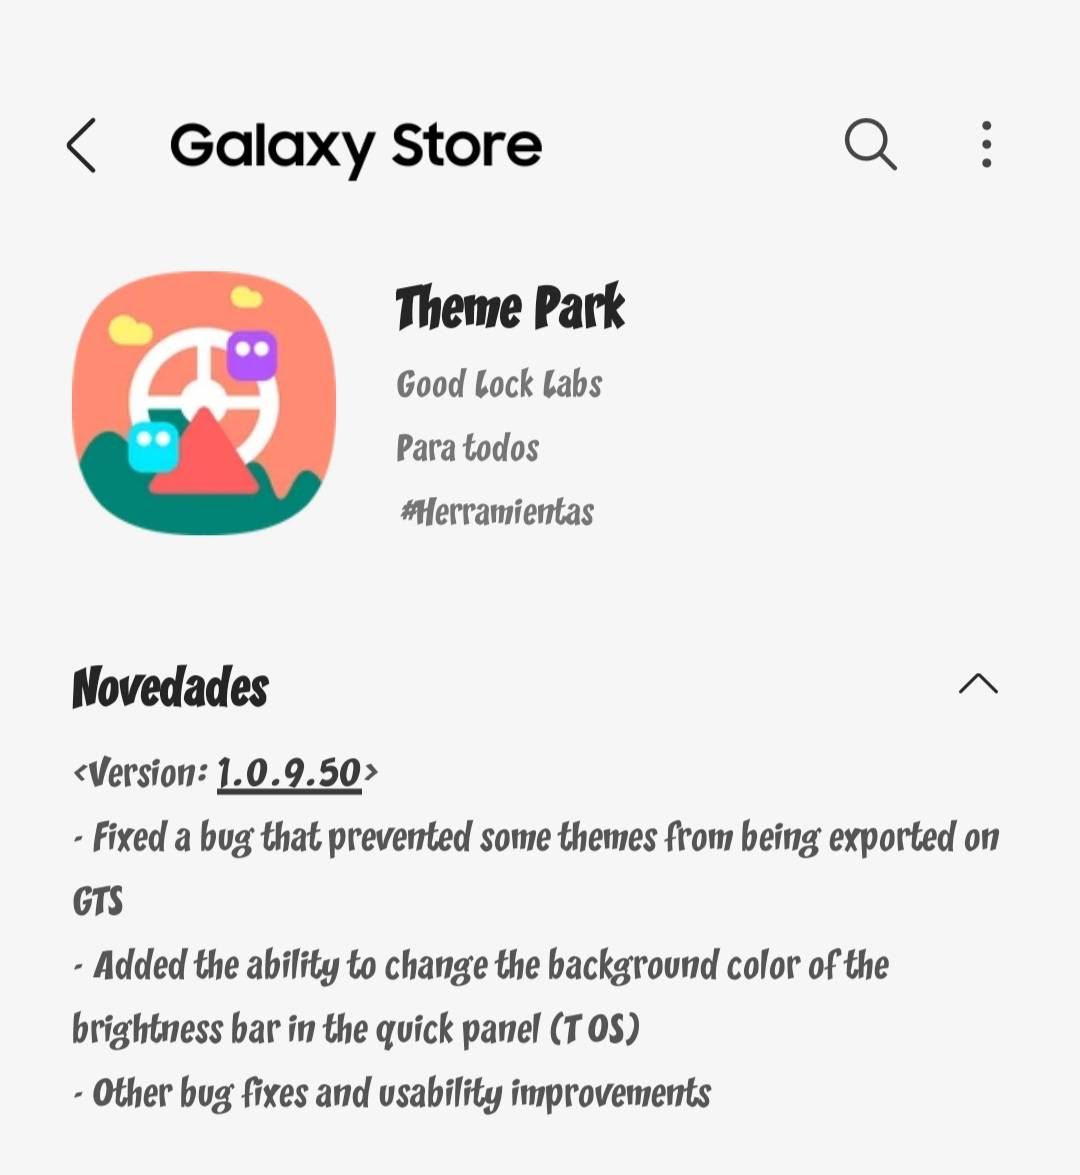 Theme Park versión 1.0.9.50 - Samsung Members